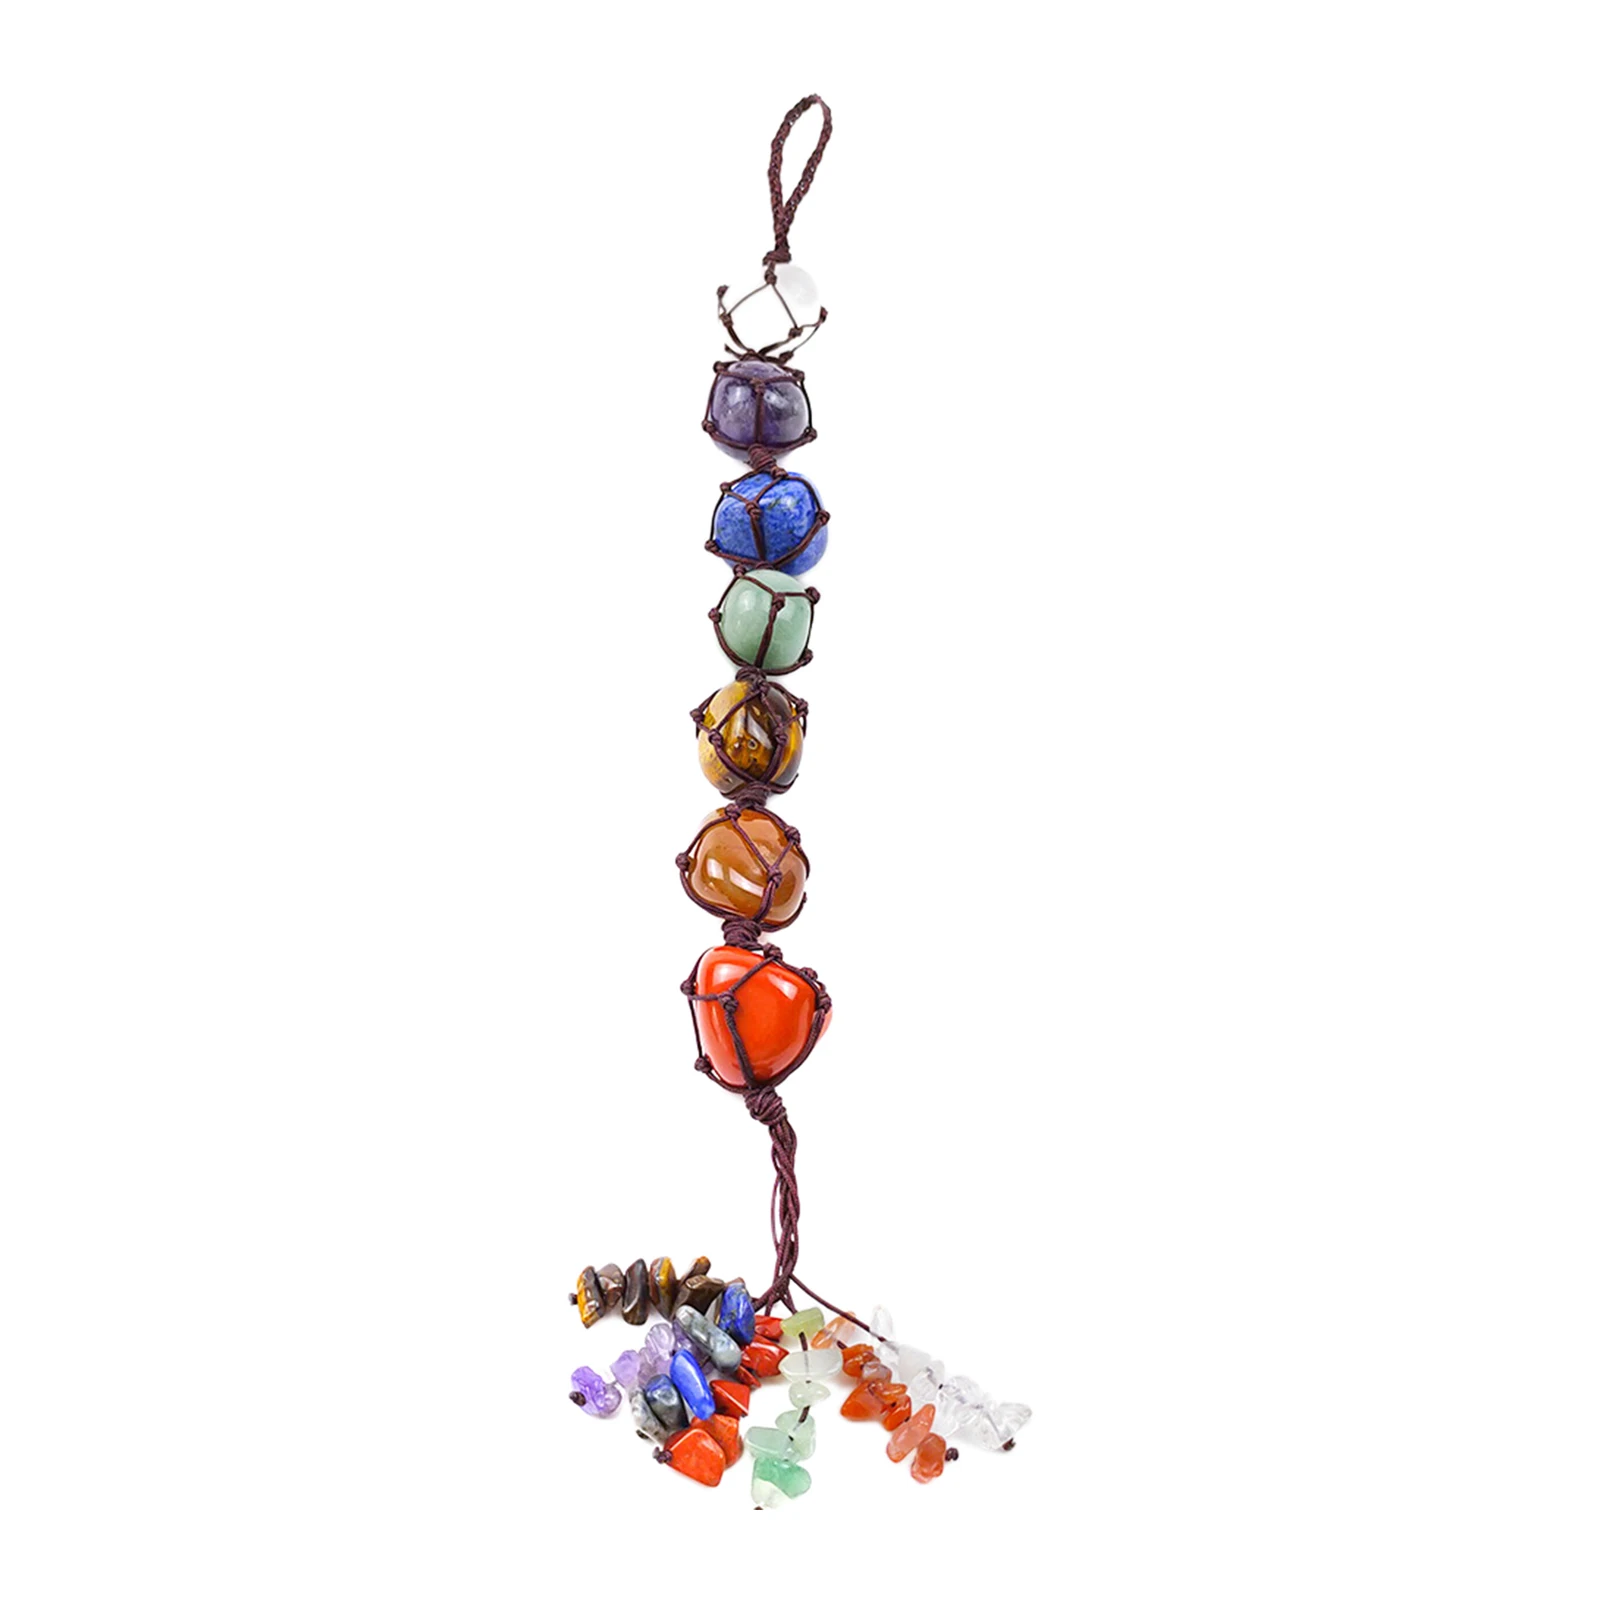 Meditation Reiki Heal Crystals Pendant Colorful 7 Chakra Hanging Decoration Wall Art Natural Stones Christmas Decor Ornament